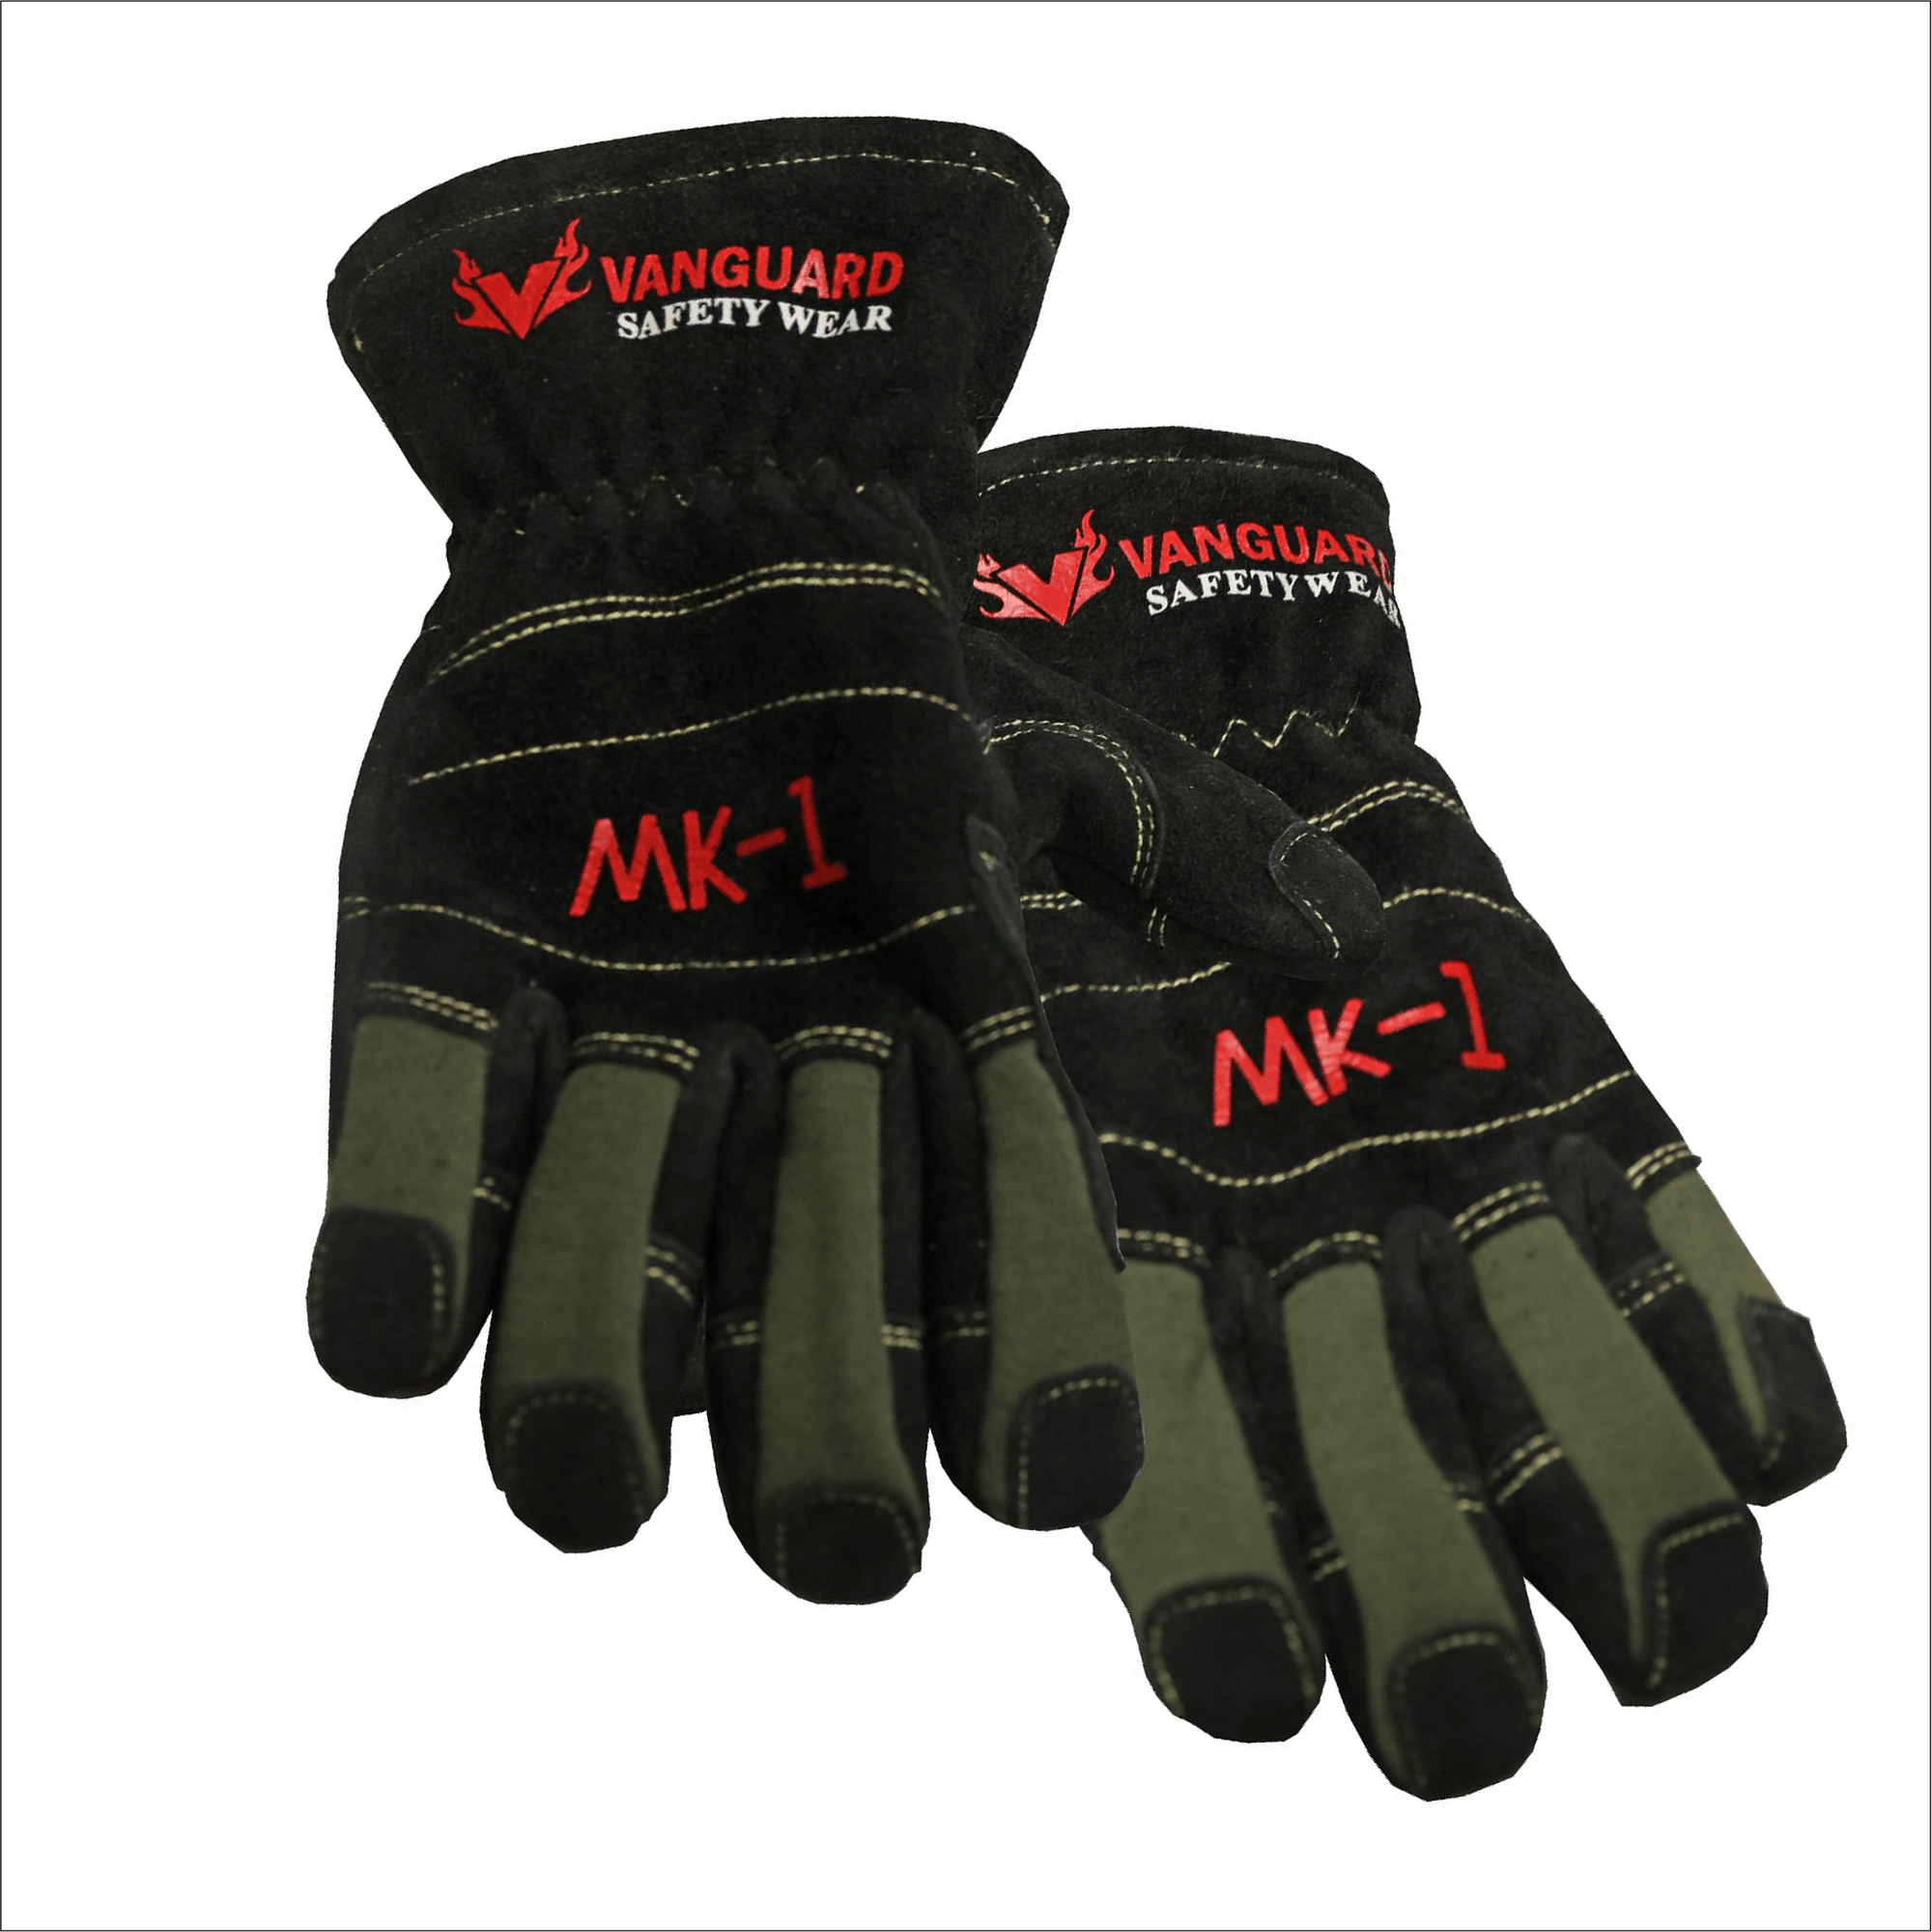 Vanguard MK-1, Vanguard Safety Wear, Firefighter gloves, best fire gloves, structural fire gloves, firefighter gear, fire gloves